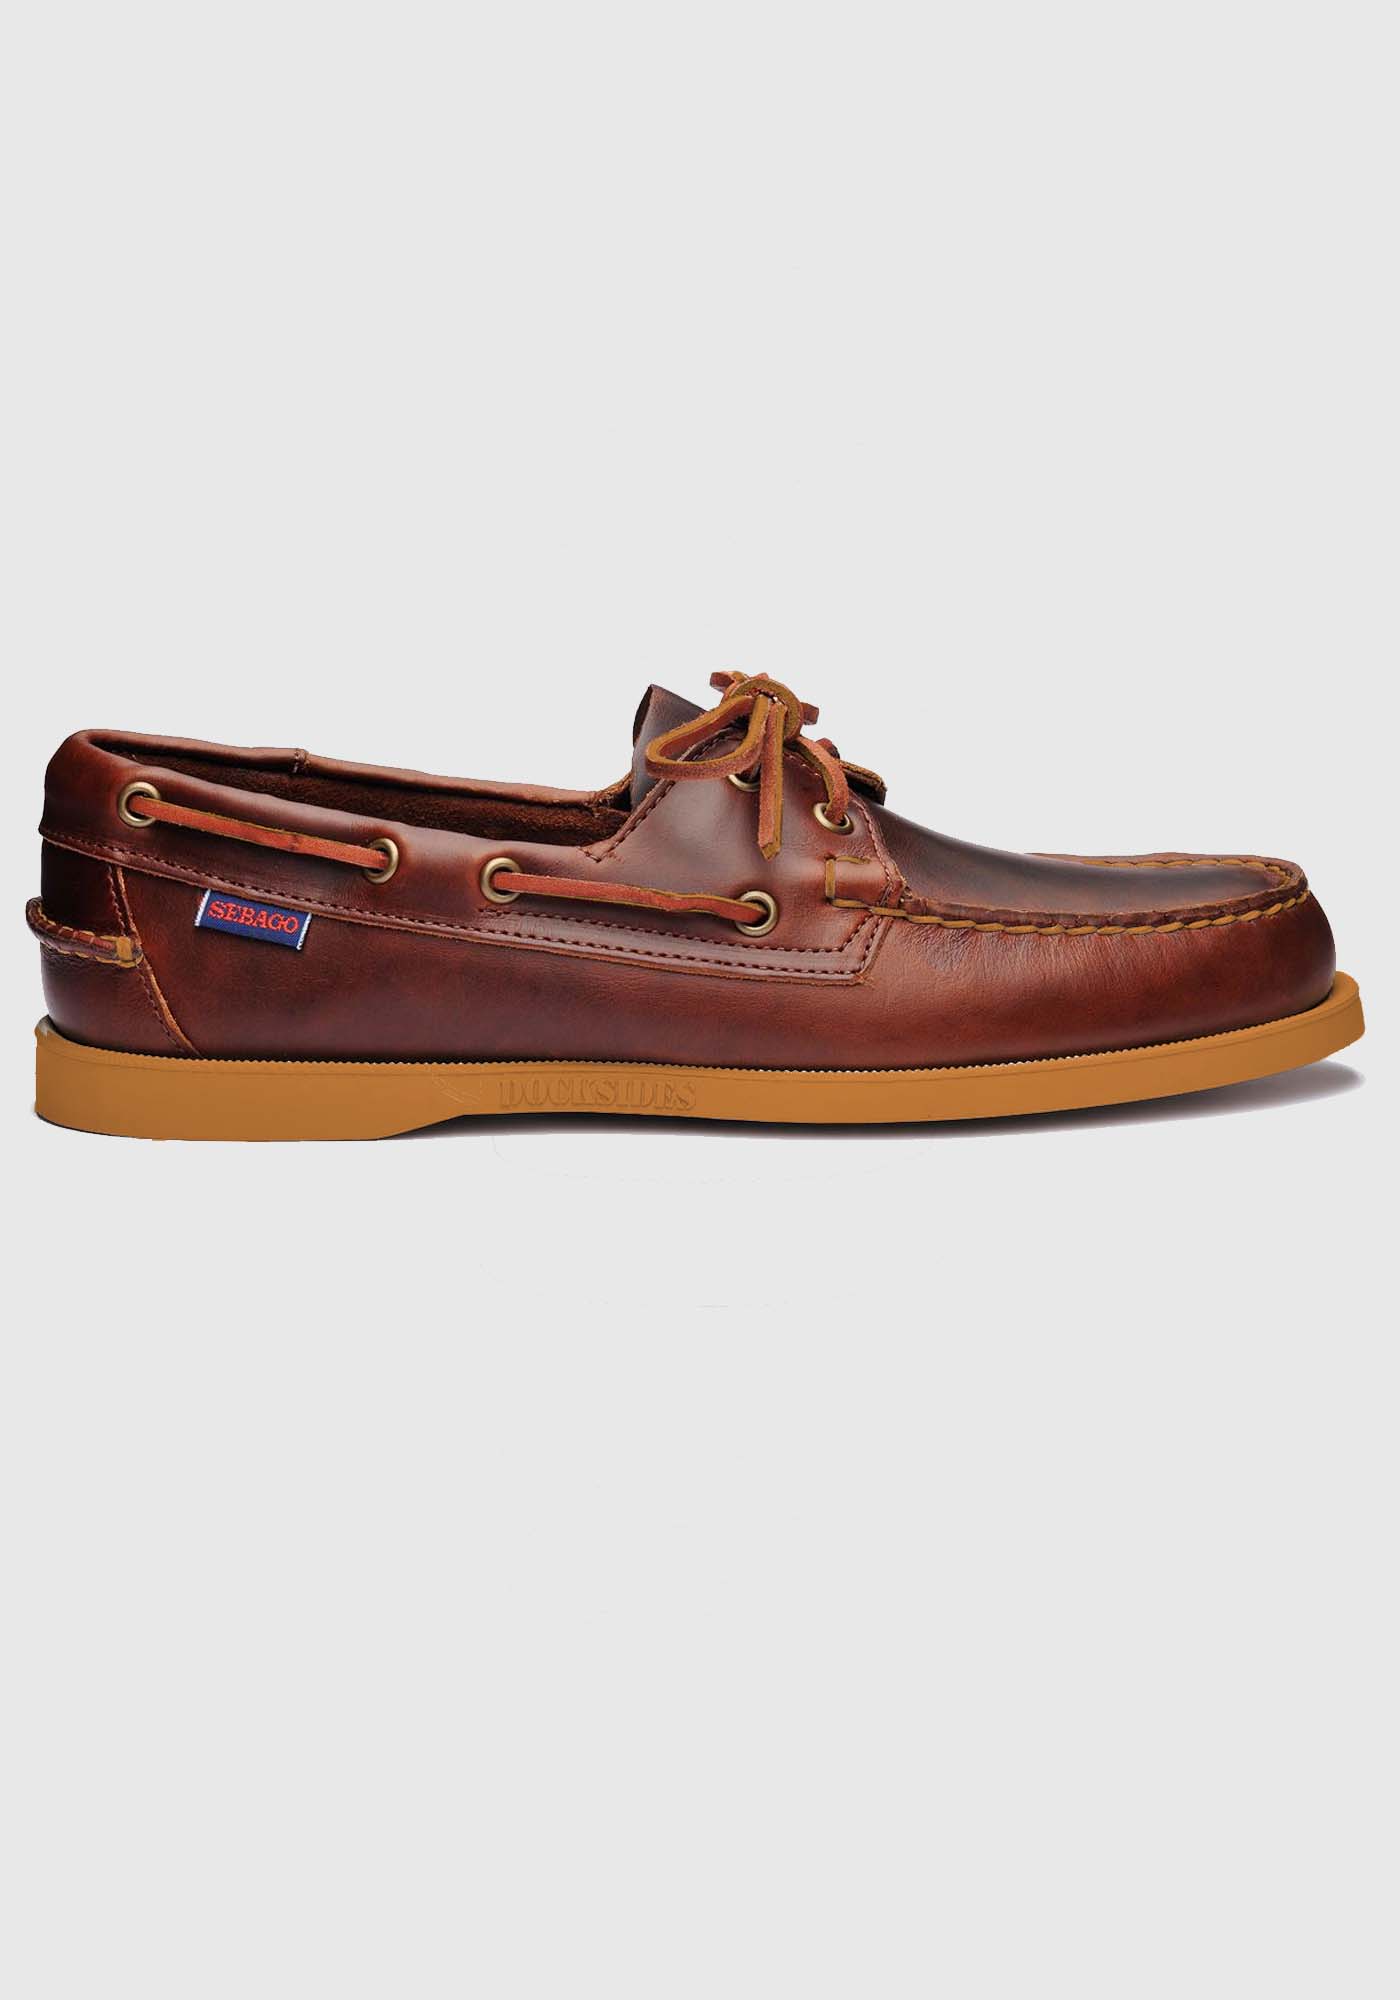 Sebago Ιστιοπλοϊκά Παπούτσια της σειράς Portland - 70000G0 A90 Brown Honey